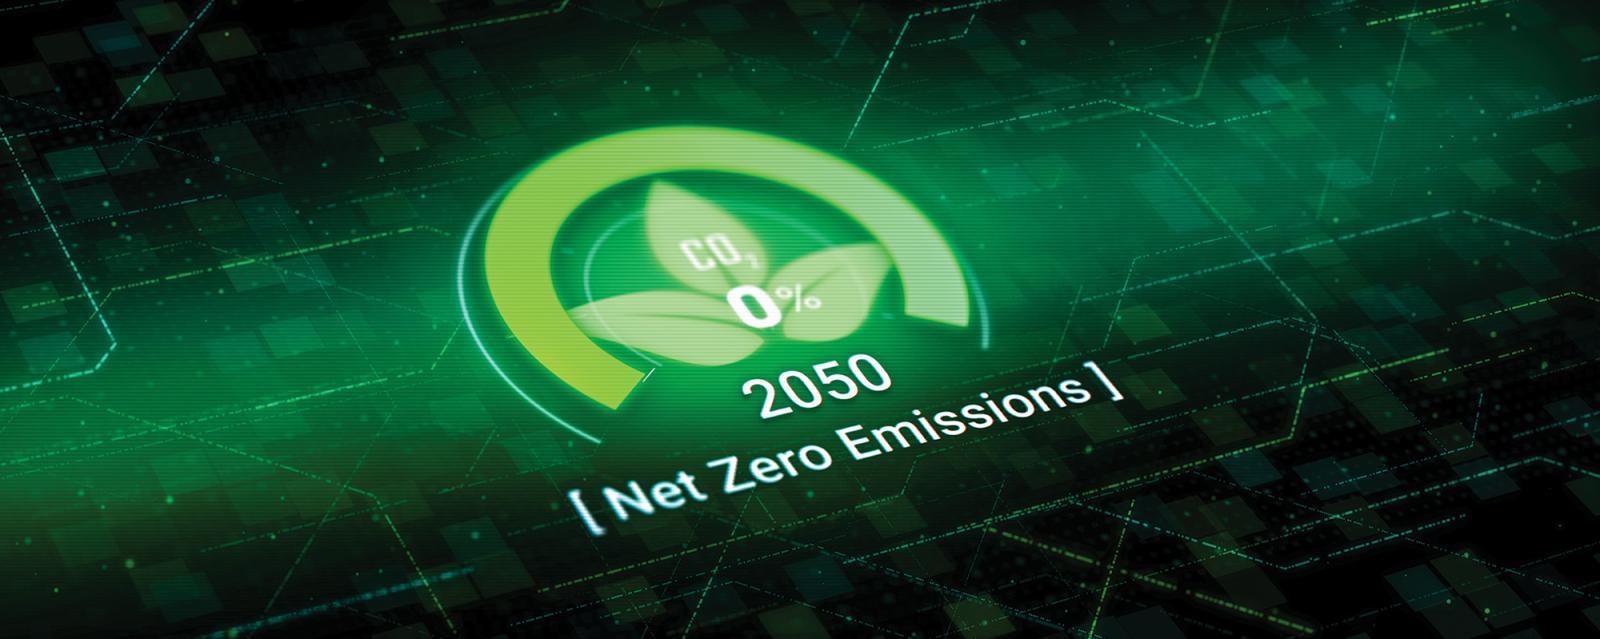 Reaching net-zero emissions before 2050